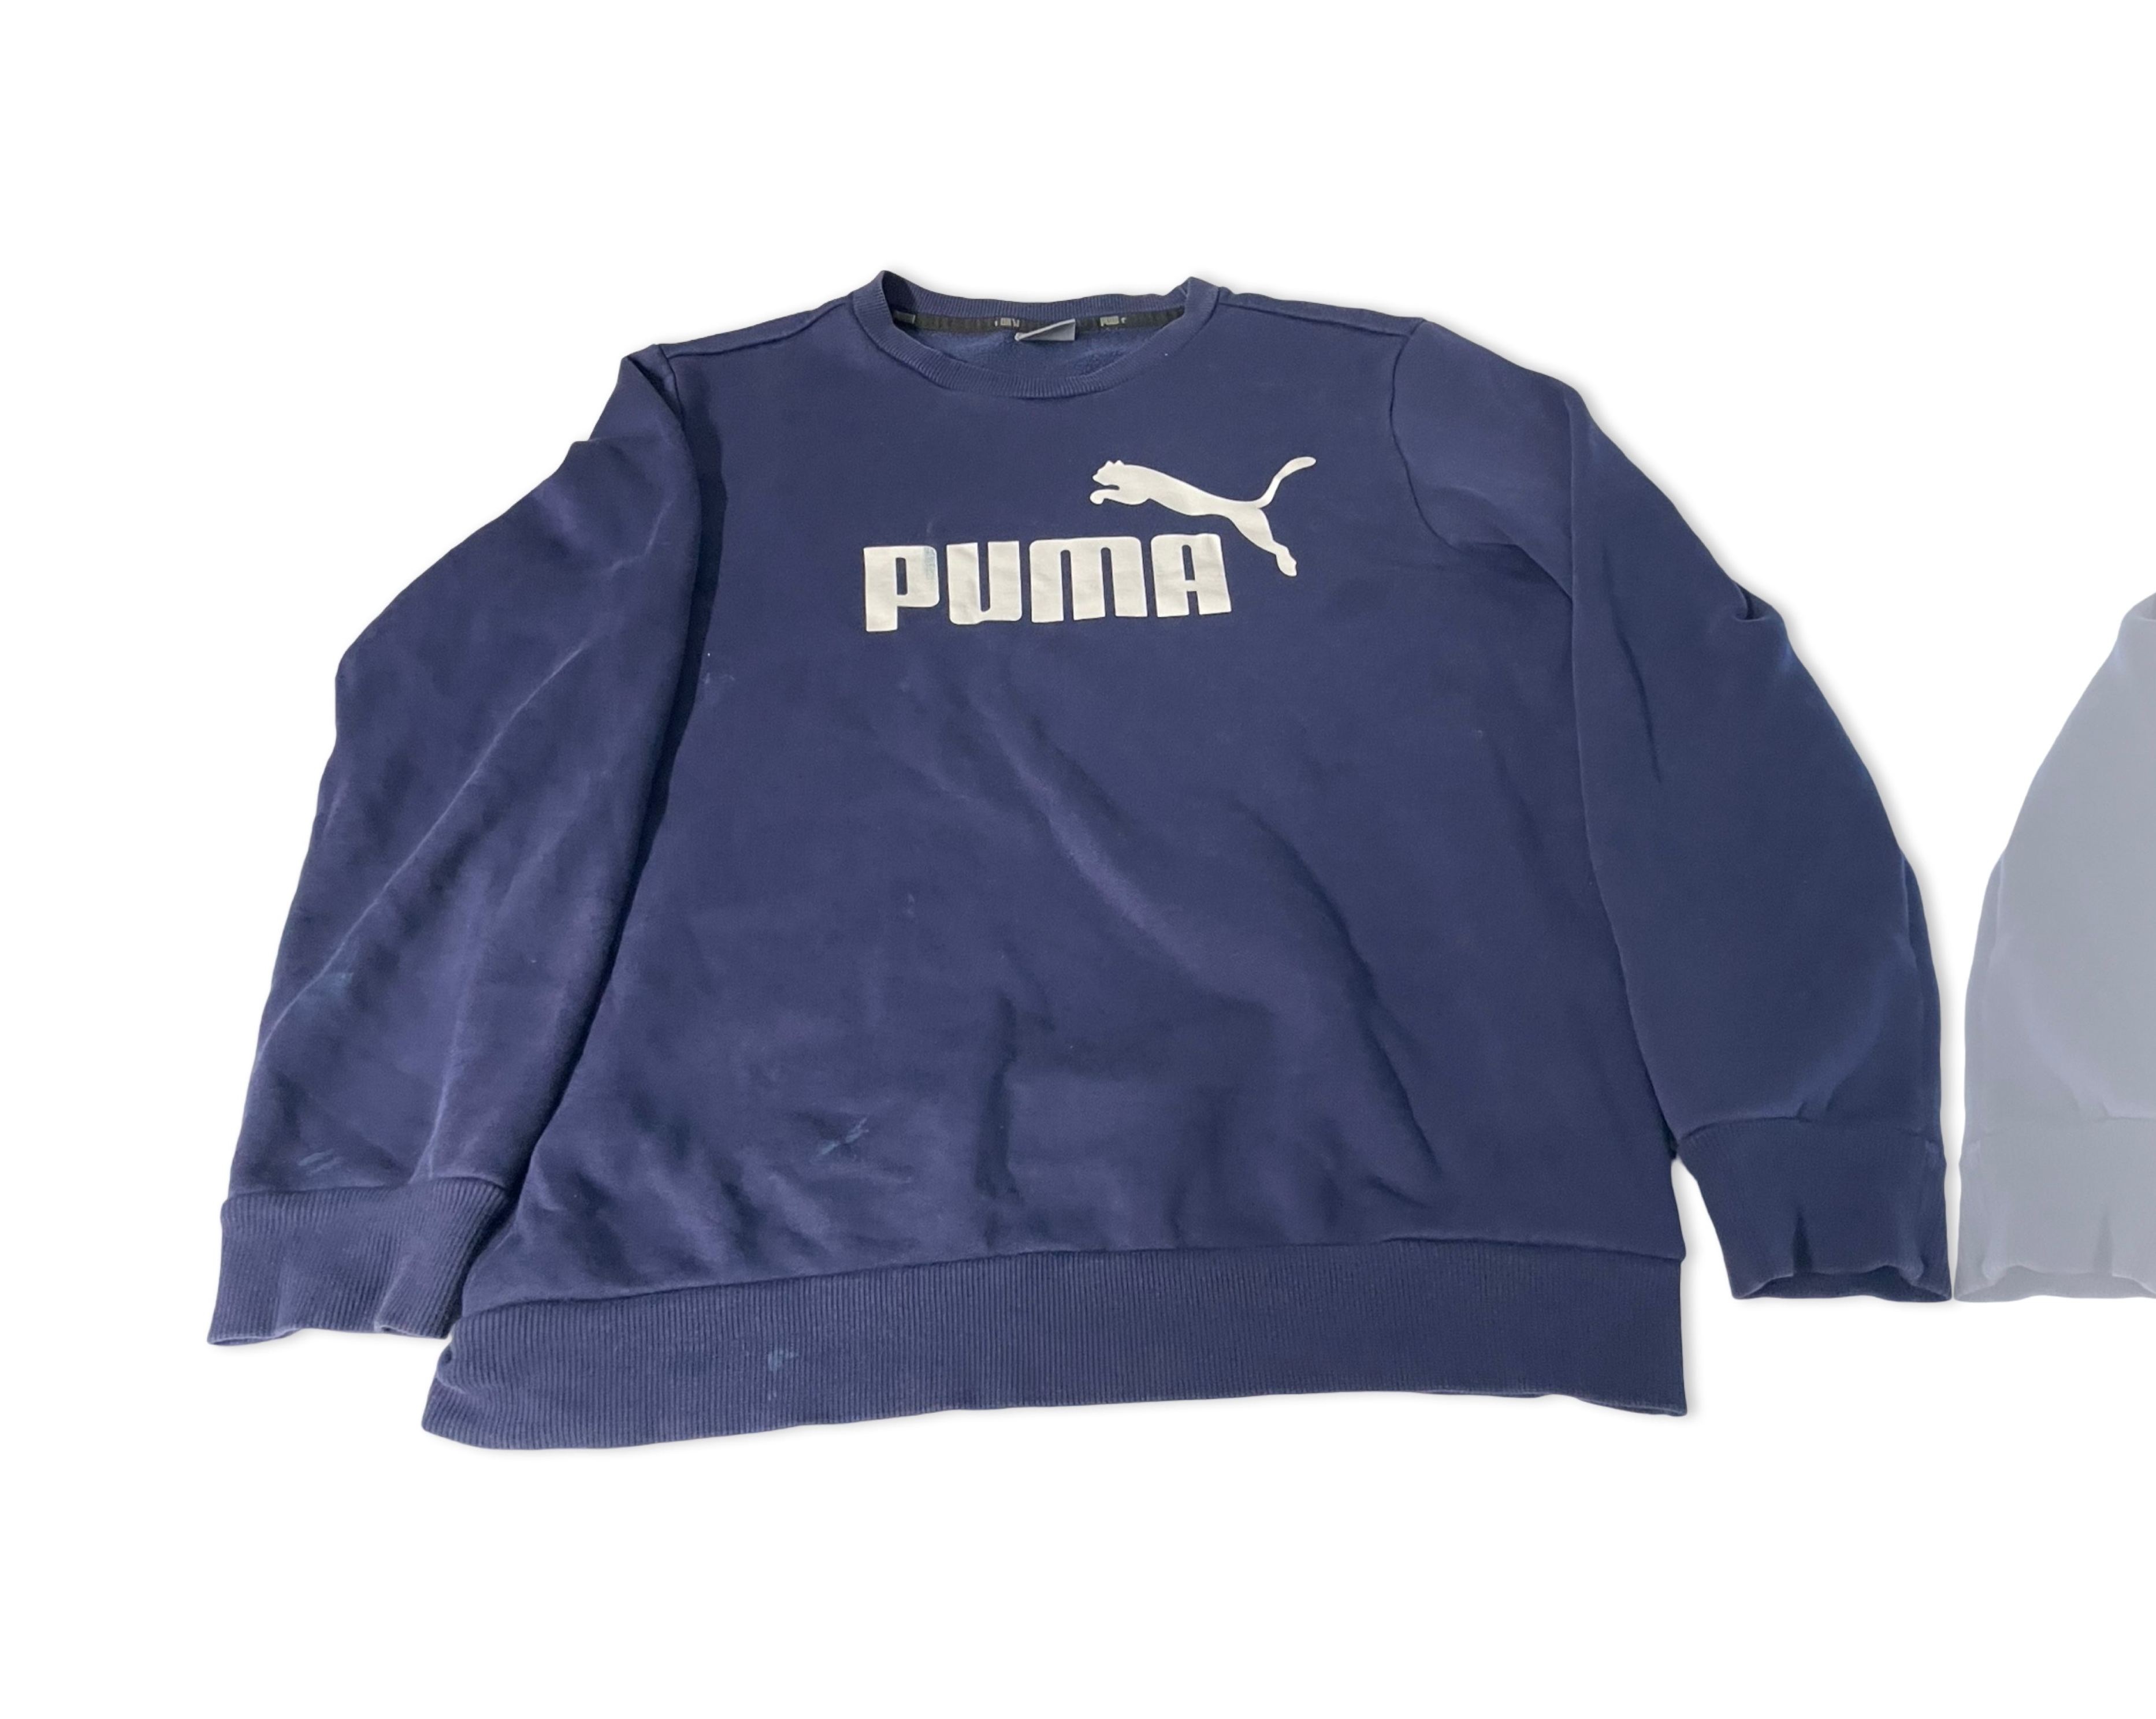 Rare Vintage Puma Sweatshirt / Blue Navy Jumper / Puma Sweater / Pullover Crewneck / Sportswear / Big Logo Printed / Small Fit Size|SKU 4244